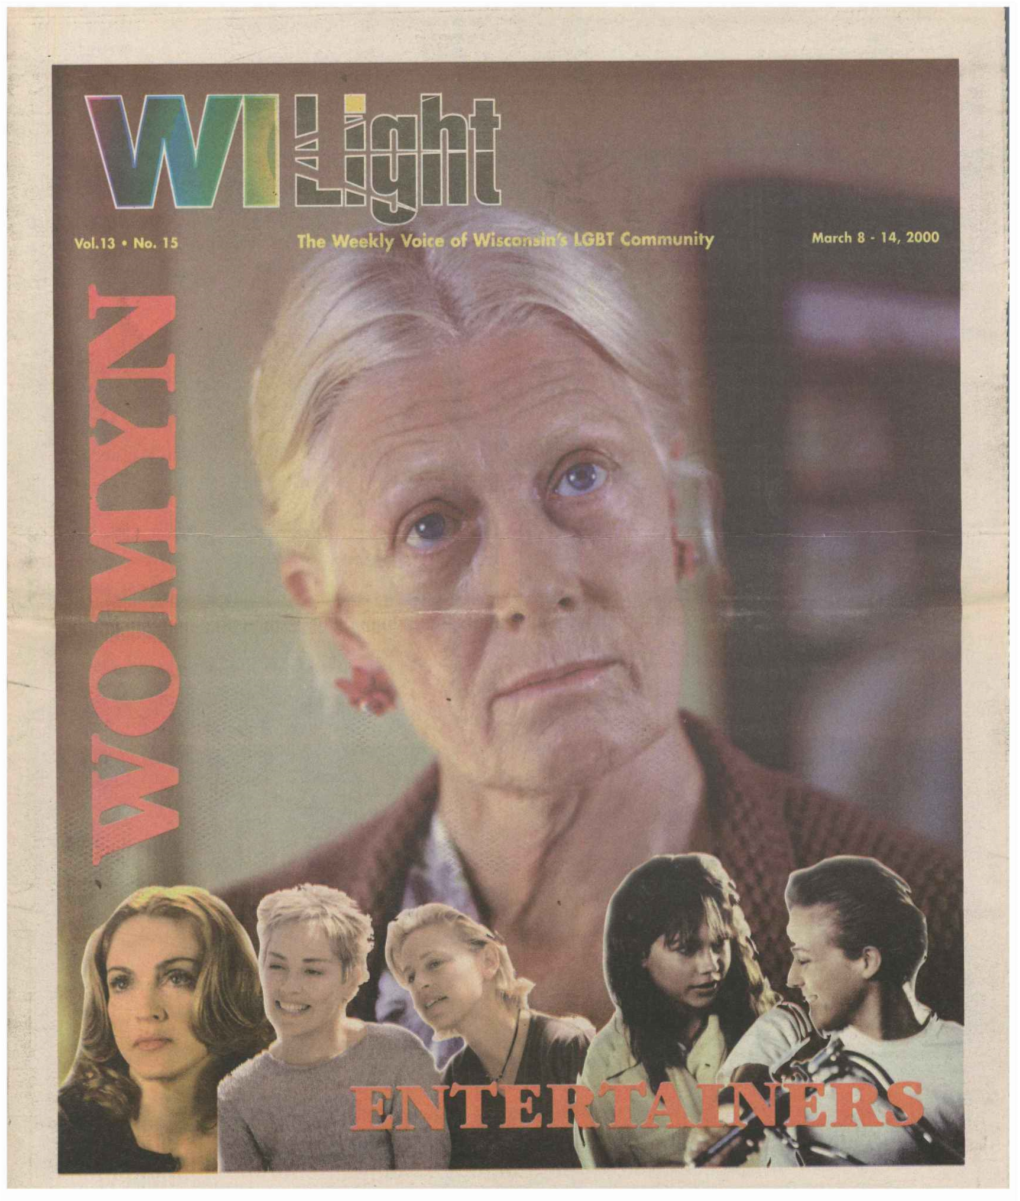 The Week 'Y °Ice of Wiscol,Ibtreil LGBT Community March 8 - 14, 2000